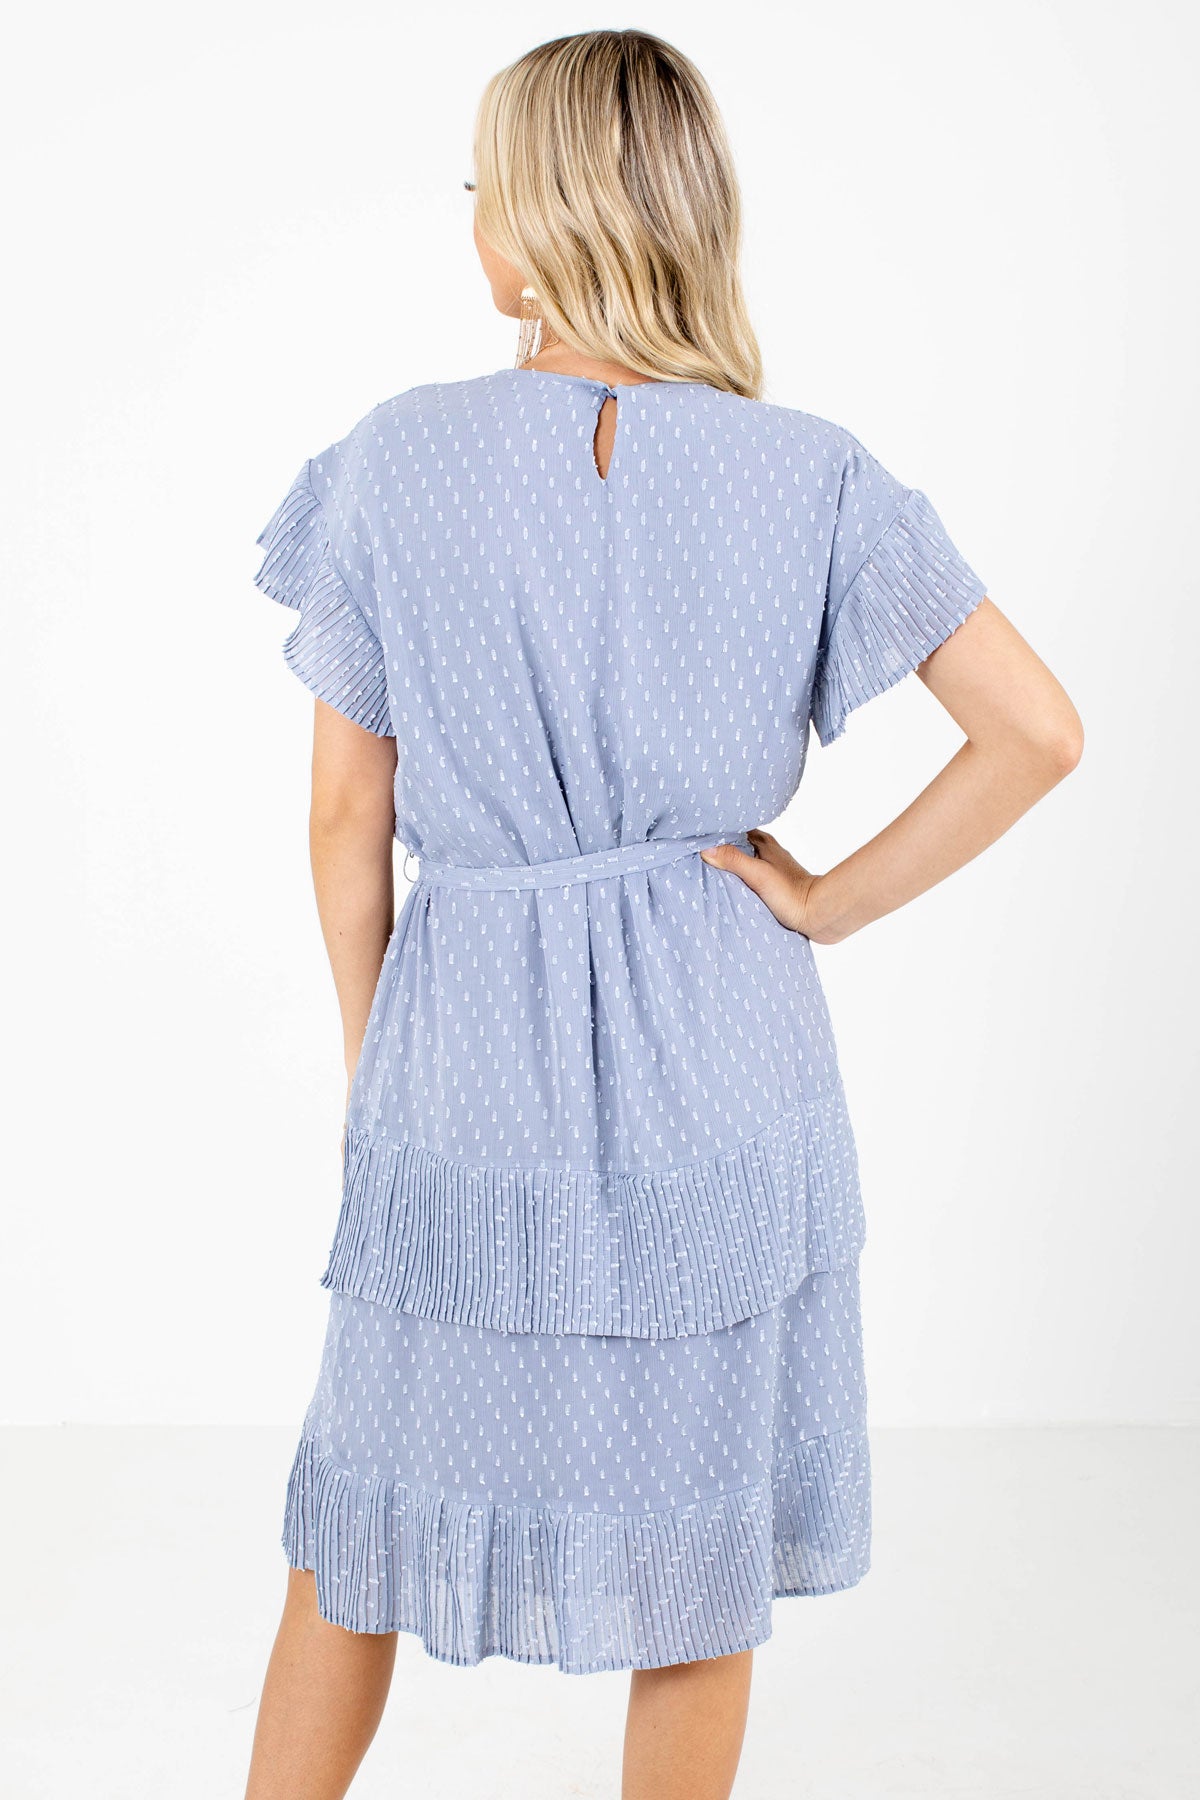 Women's Blue Keyhole Back Boutique Knee-Length Dress